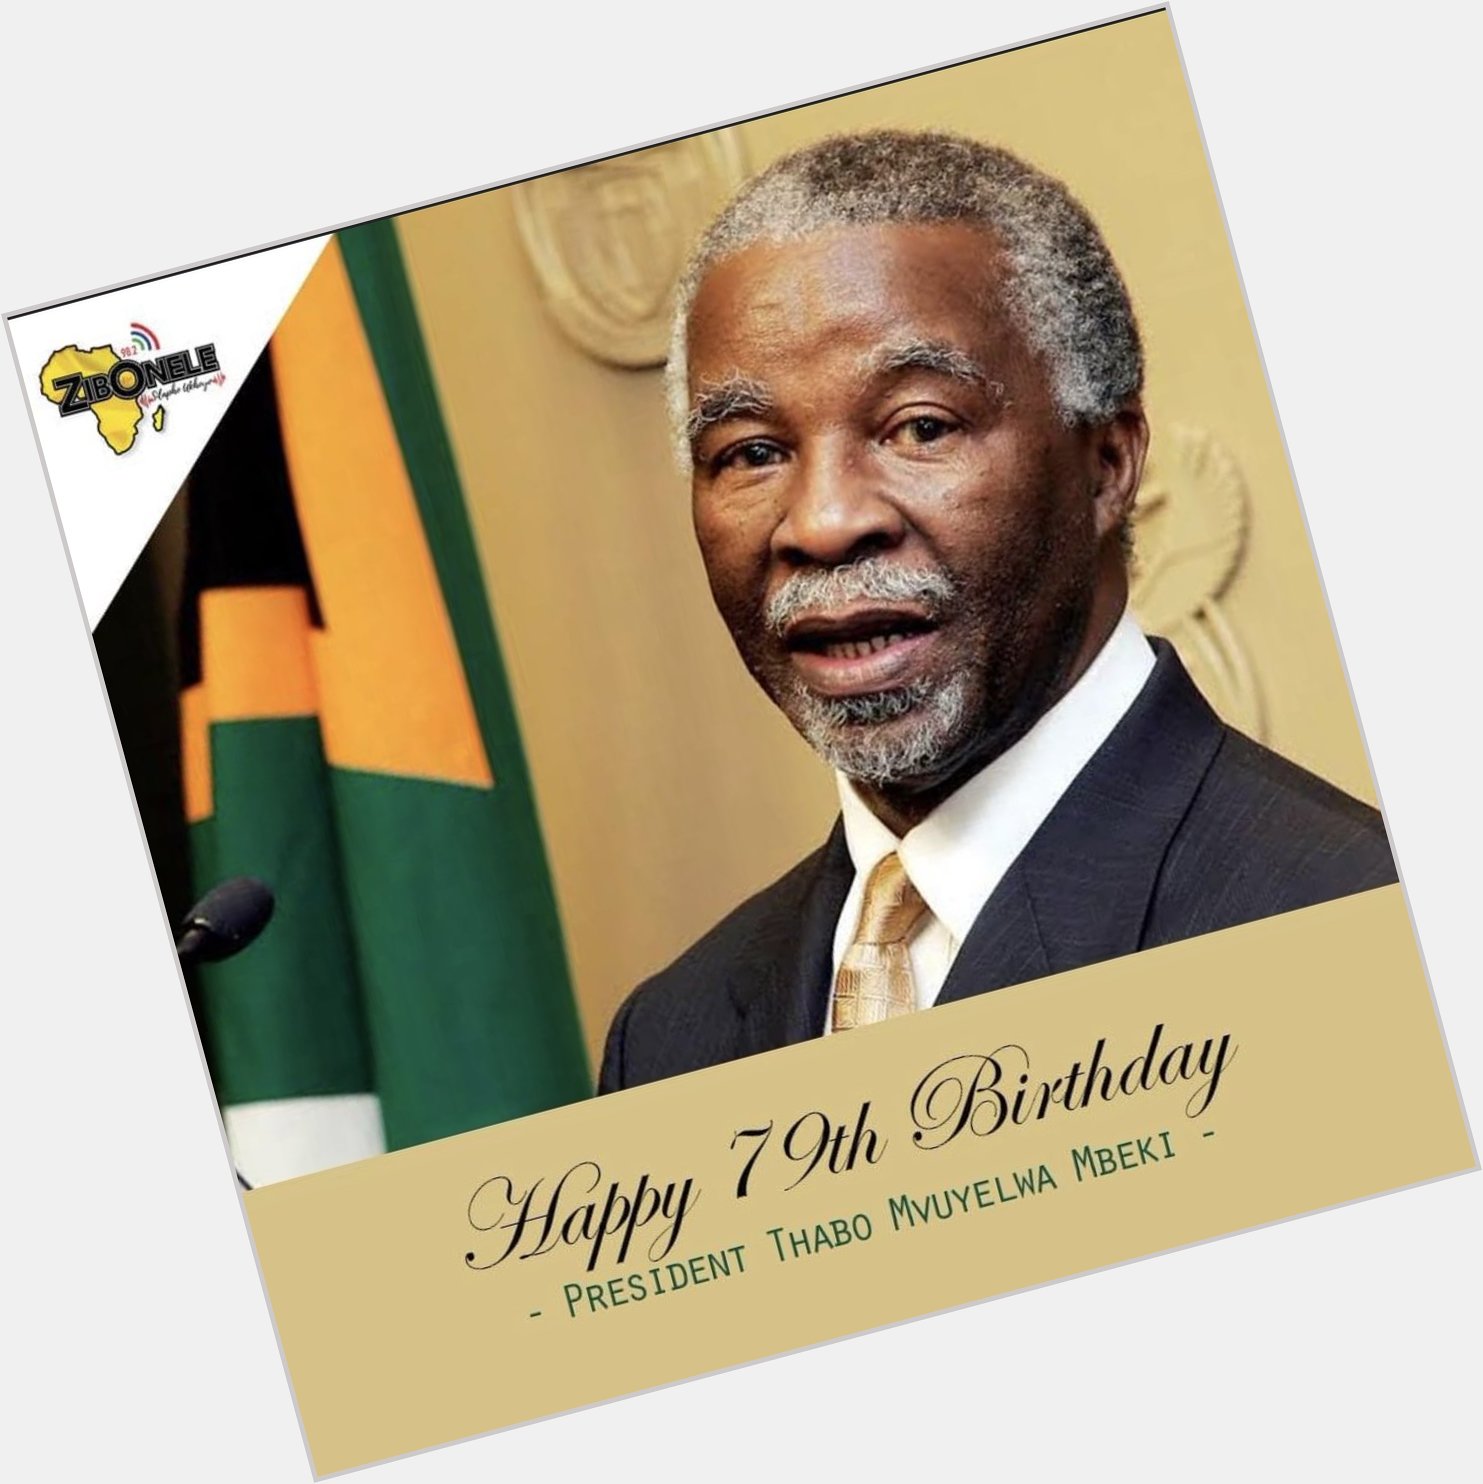 Happy birthday President Thabo Mbeki ukhule ukhokhobe Zizi elimnyama nenkomo zalo! Jama kaSijadu! Ngxili inoboya! 